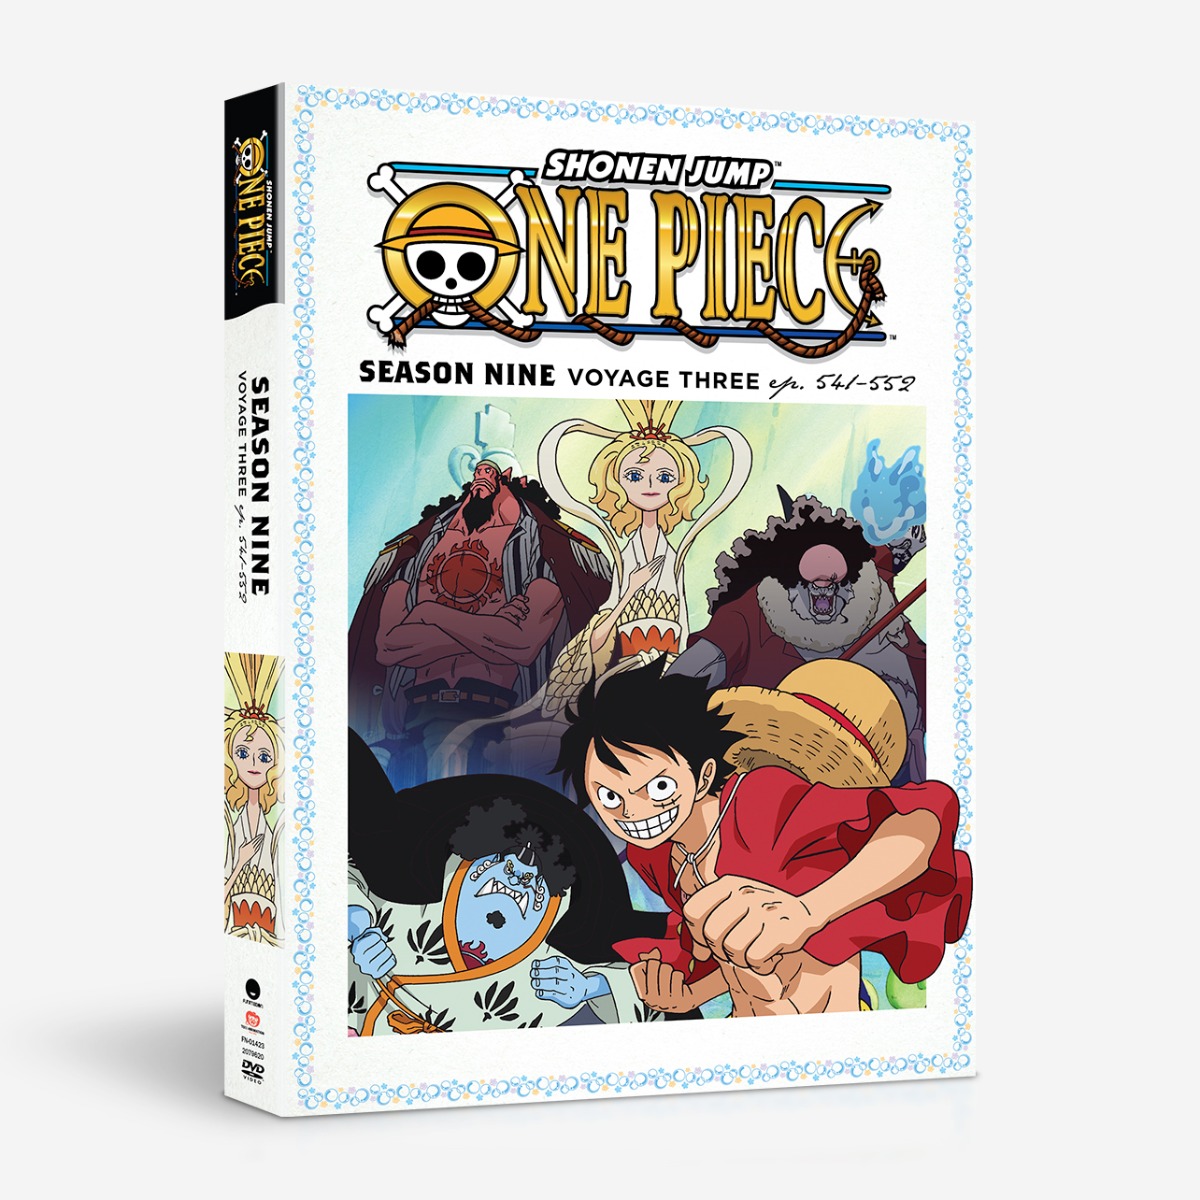 One Piece Season 9 Voyage 3 DVD Crunchyroll Store